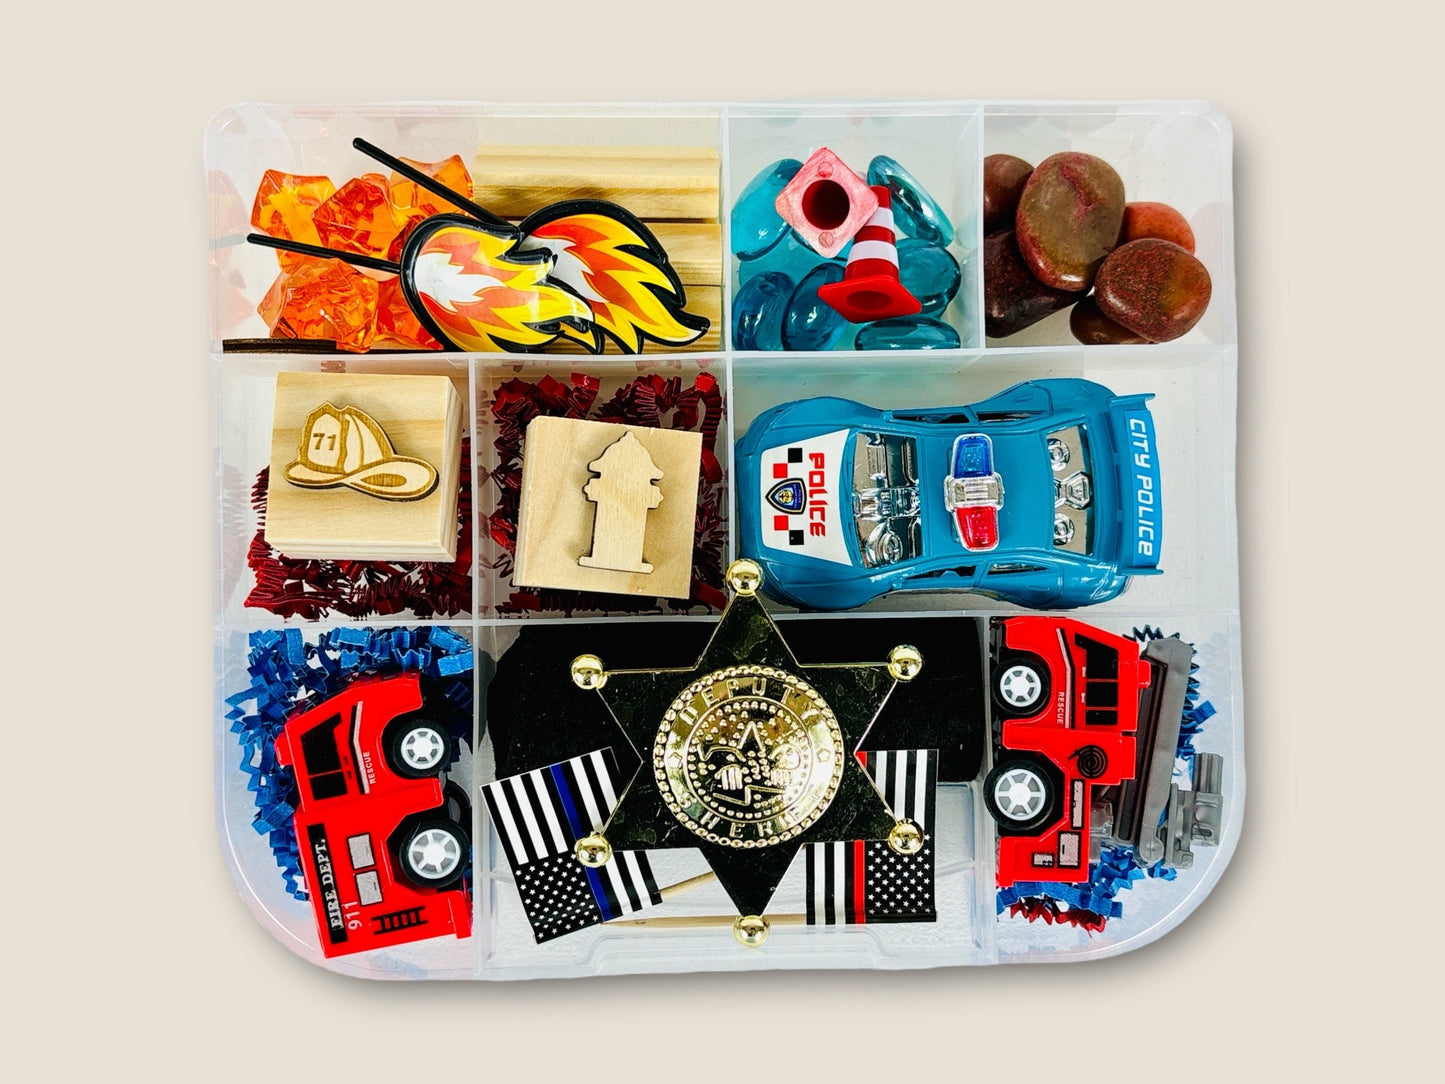 Rescue Team Sensory Kit, Fireman Play Dough Kit, First Responder Busy Box, Policeman Birthday Gift for Boys, Kinetic Sand Kit